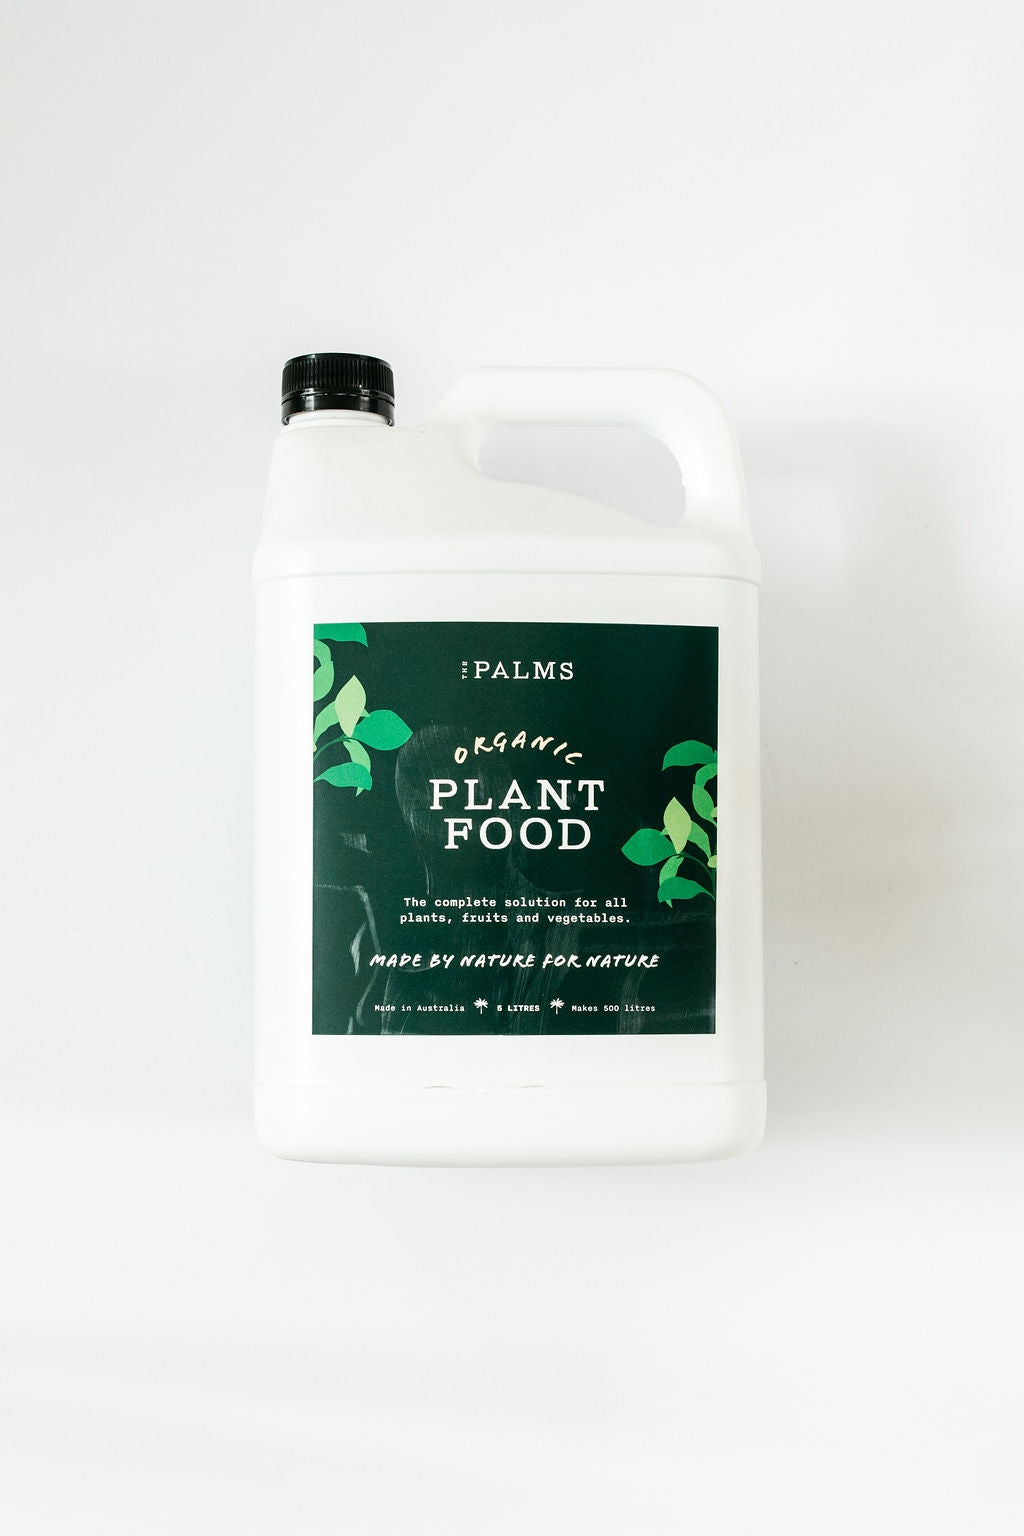 The Palms Organic Plant Food